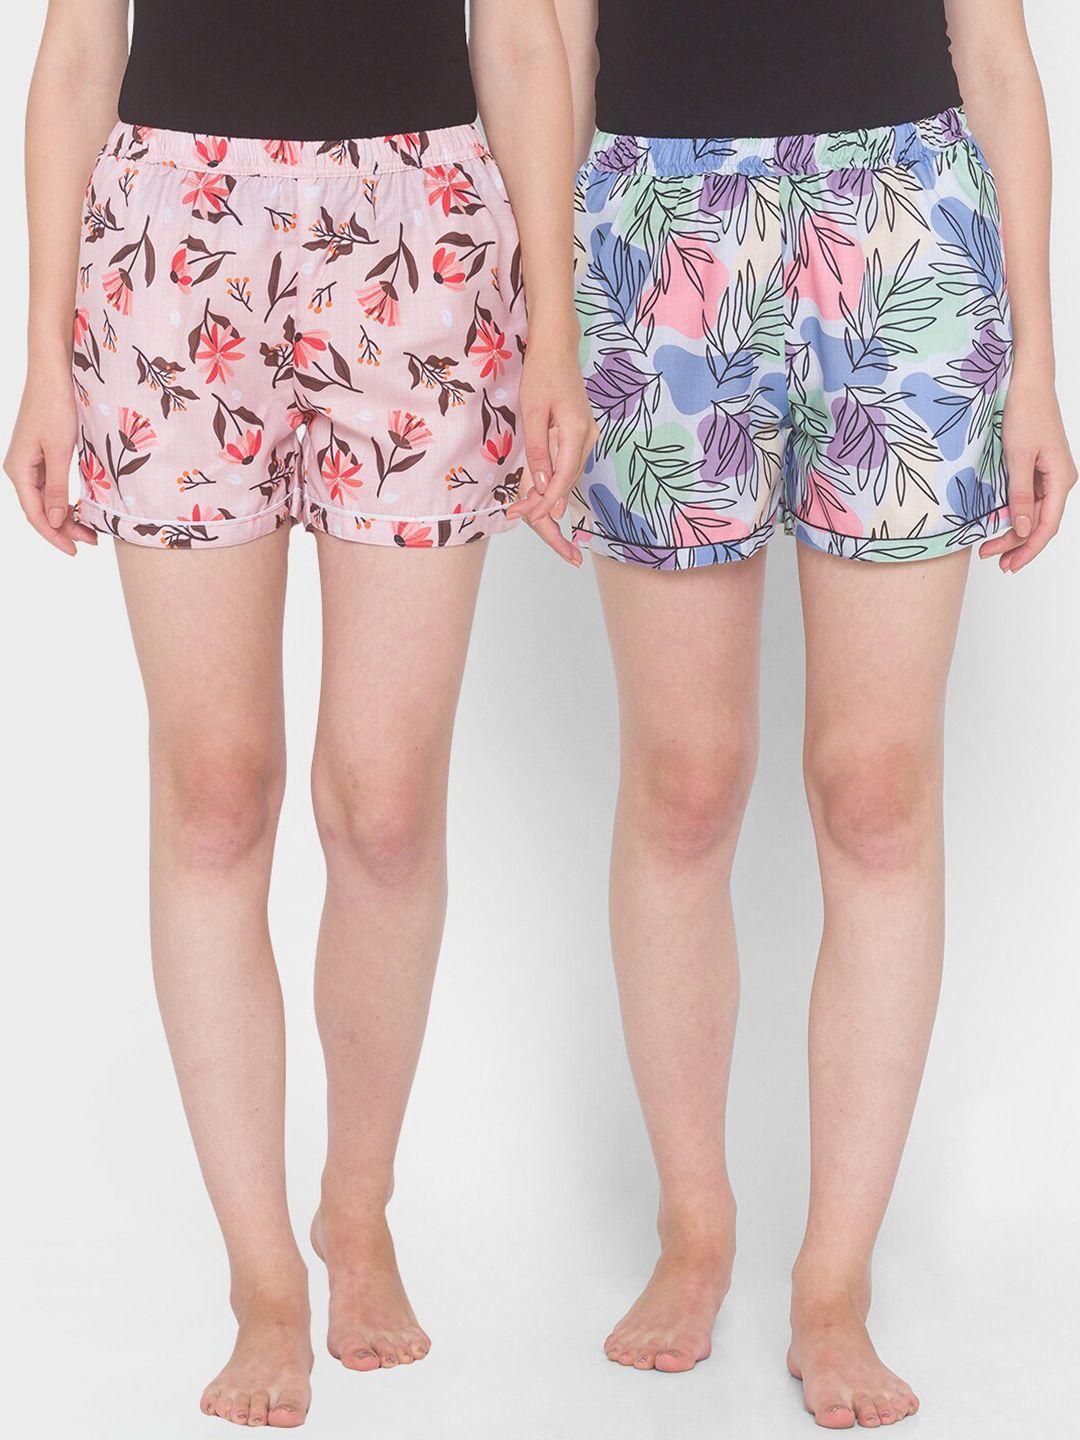 fashionrack-women-pink-&-blue-pack-of-2-printed-cotton-lounge-shorts